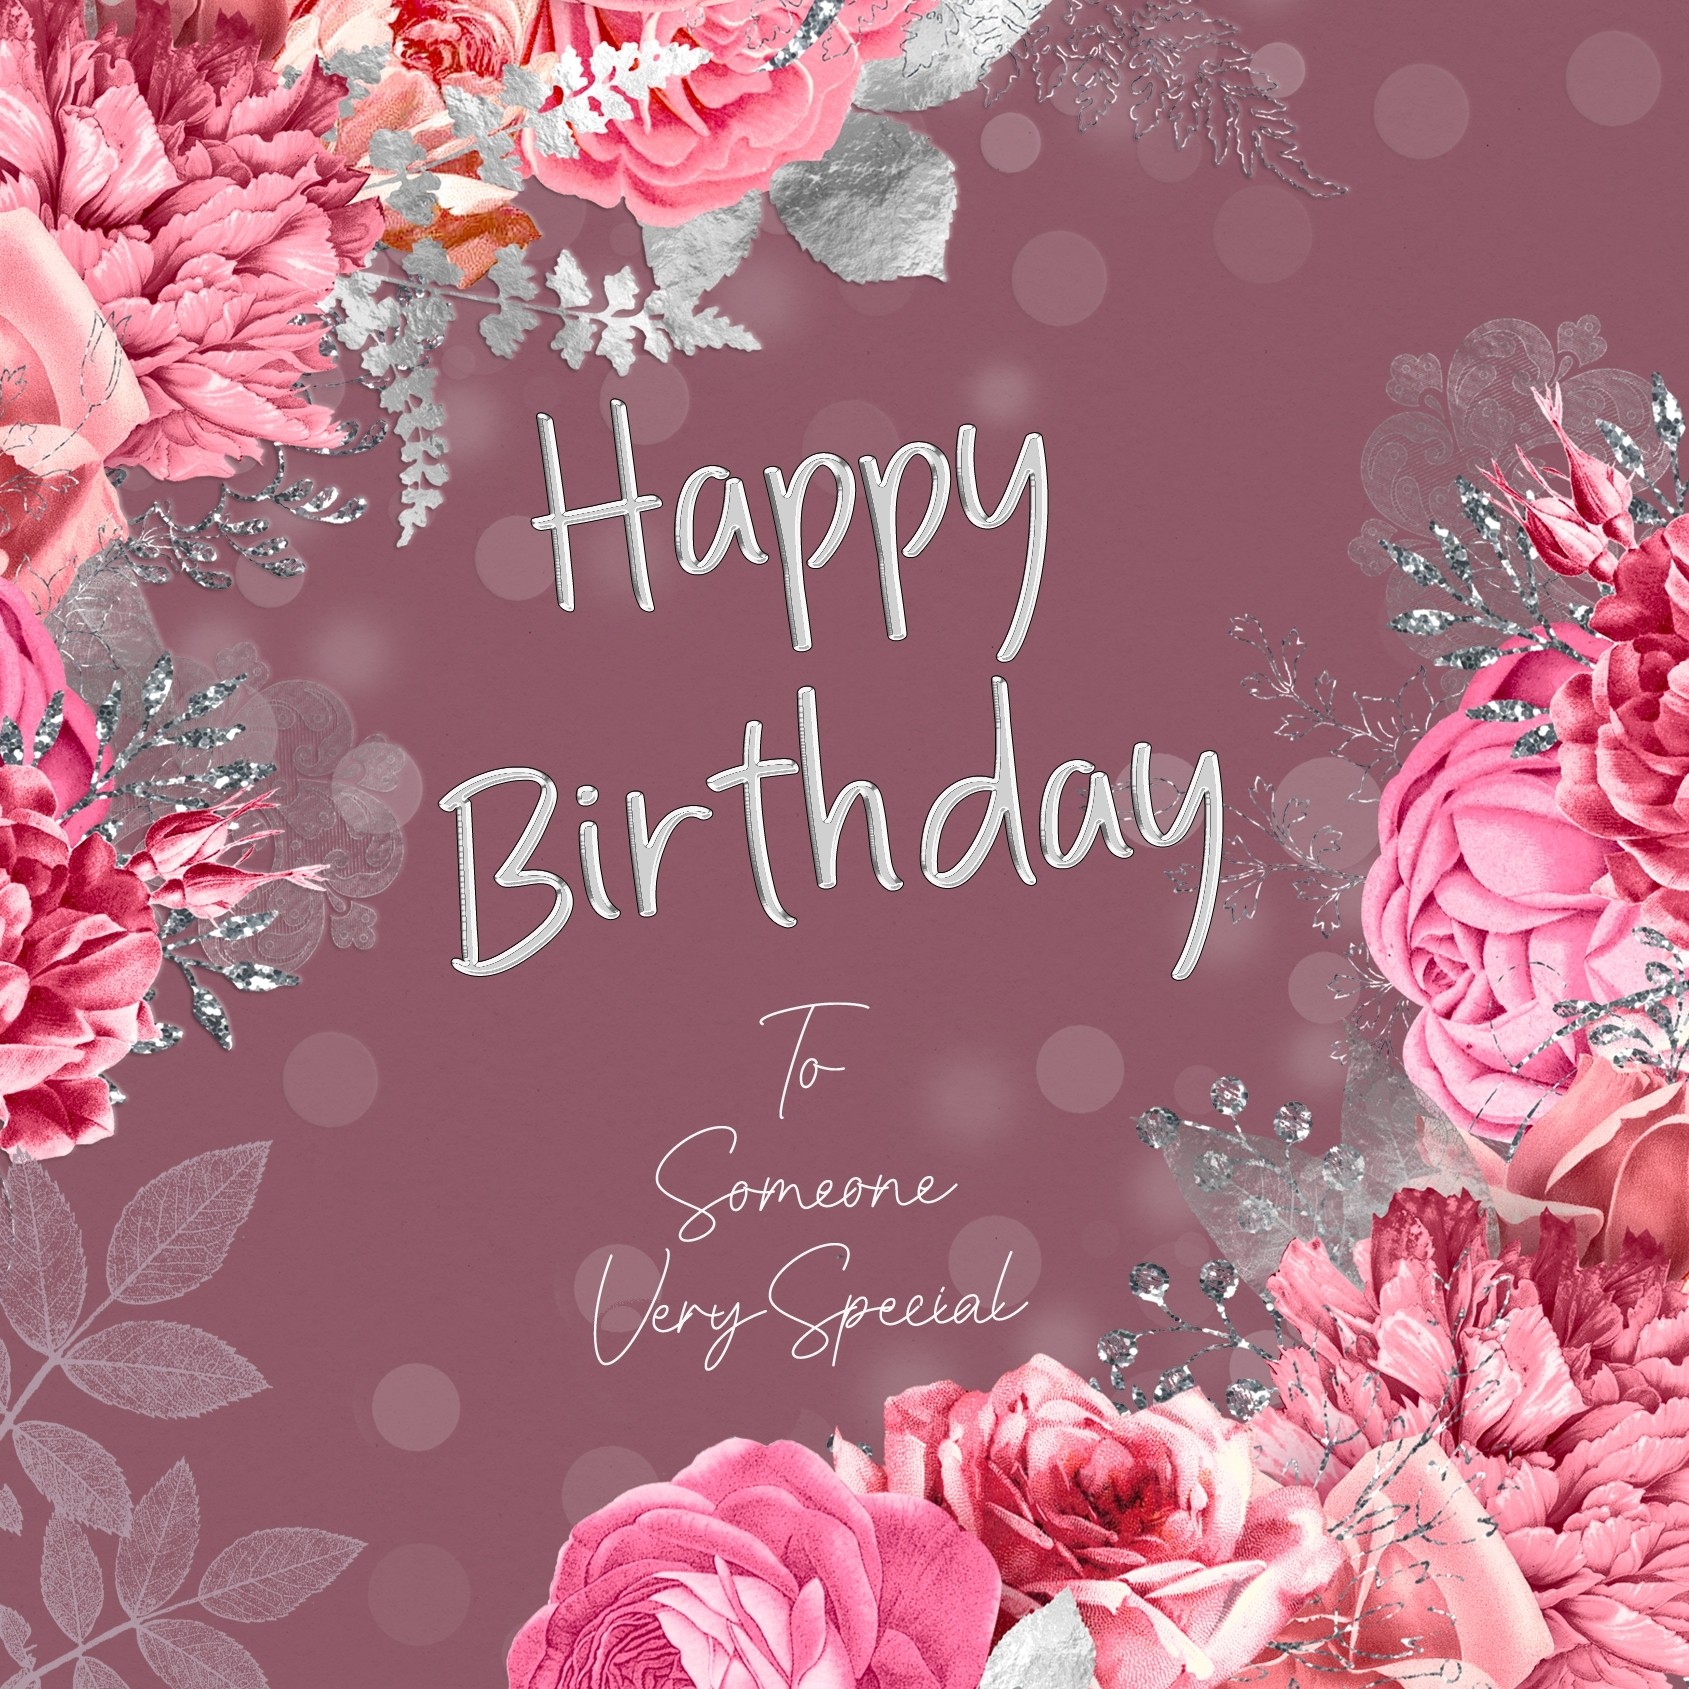 Happy Birthday Greeting Card (Square, Rose)